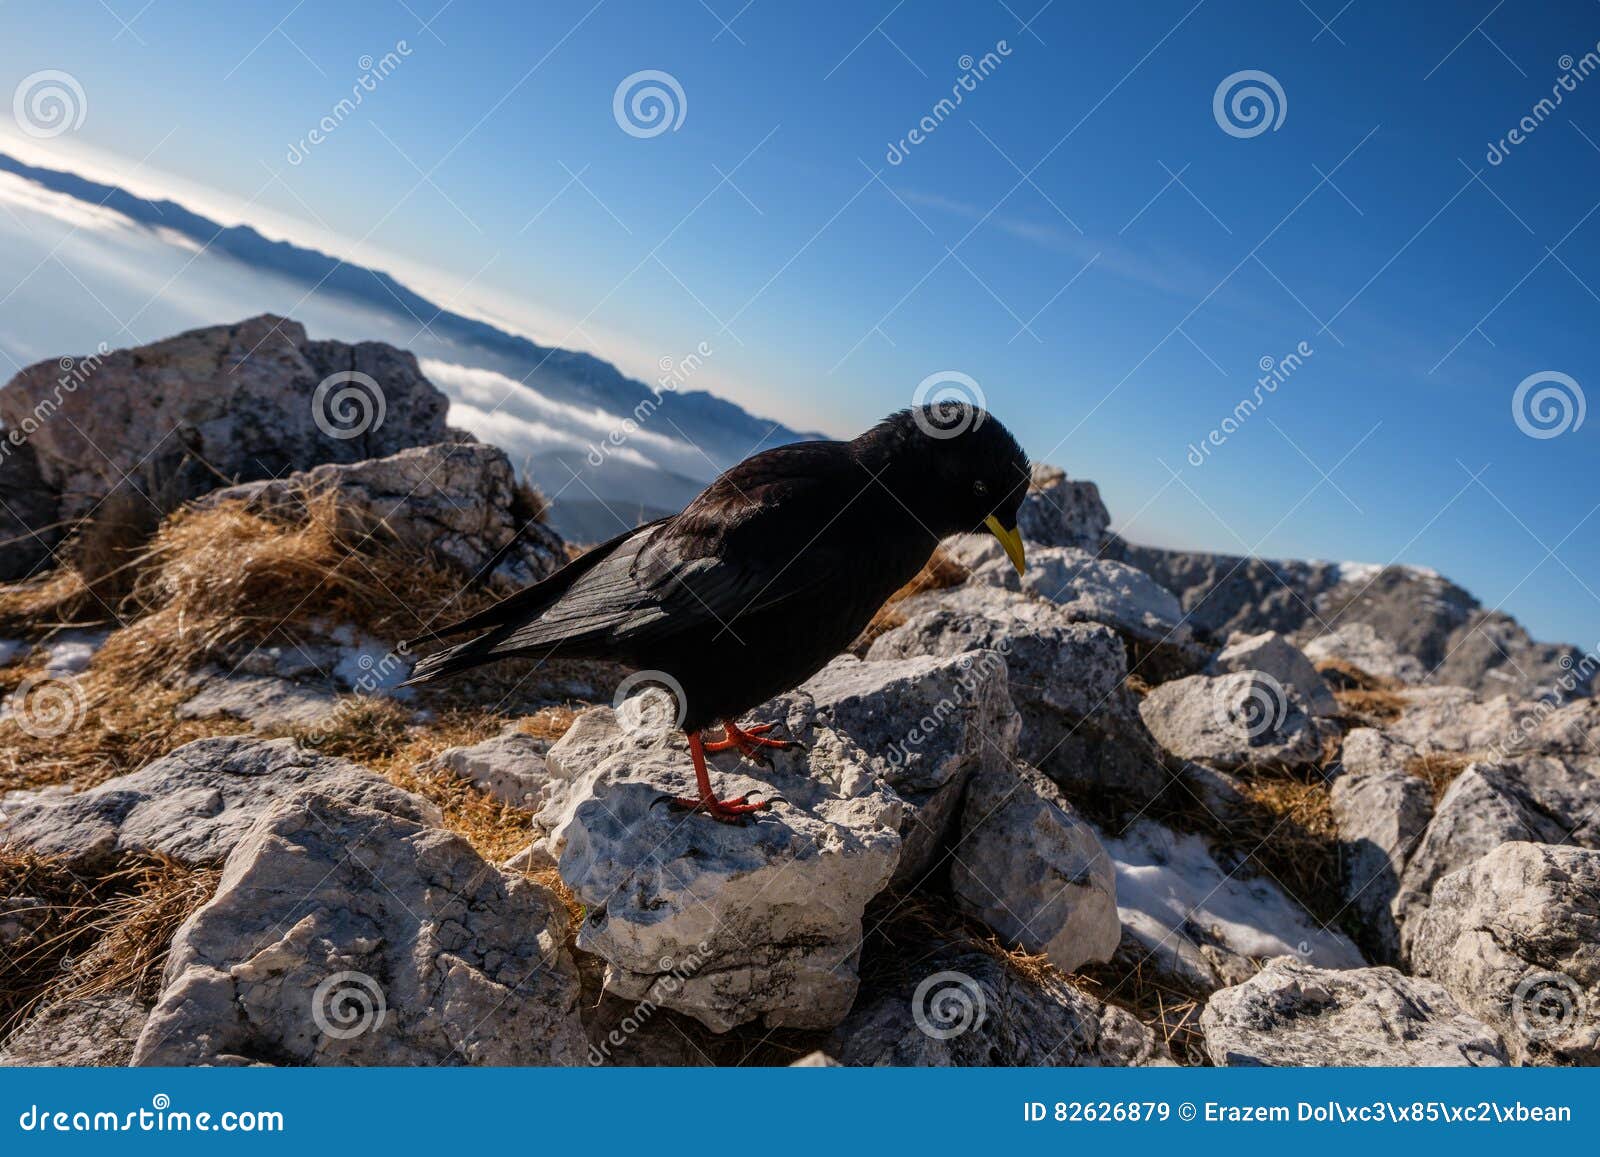 black mountain bird